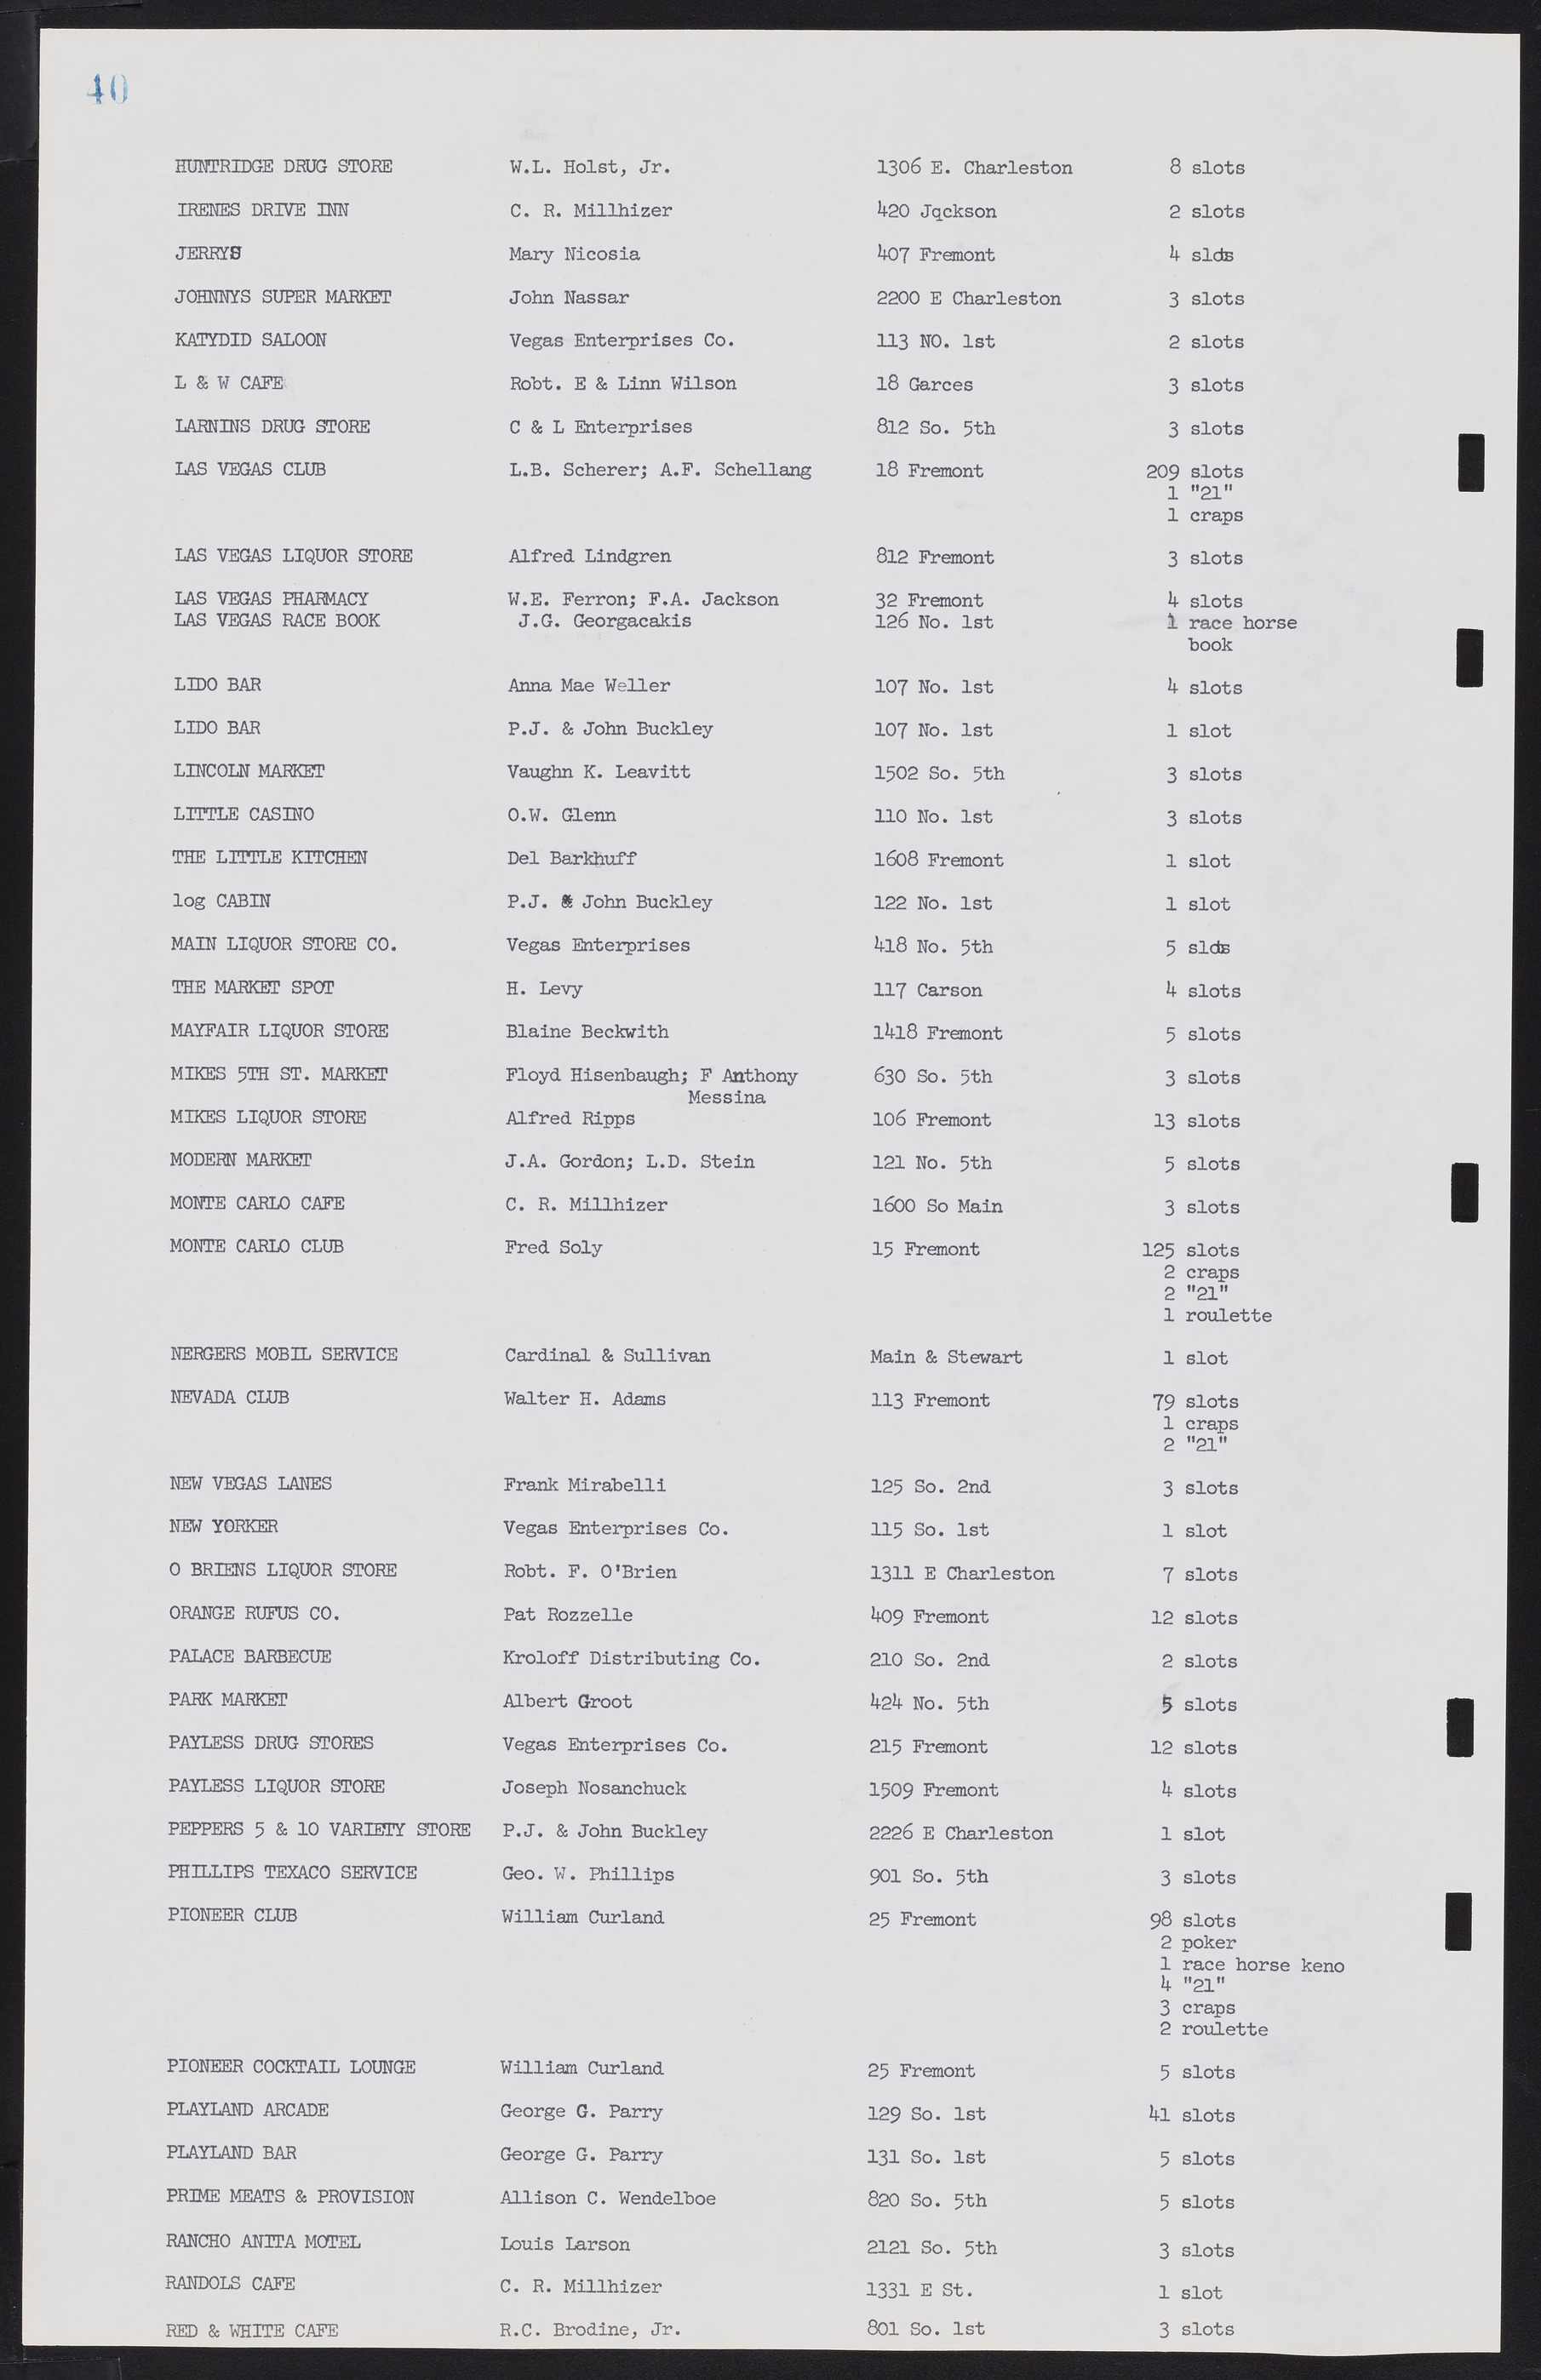 Las Vegas City Commission Minutes, February 17, 1954 to September 21, 1955, lvc000009-44